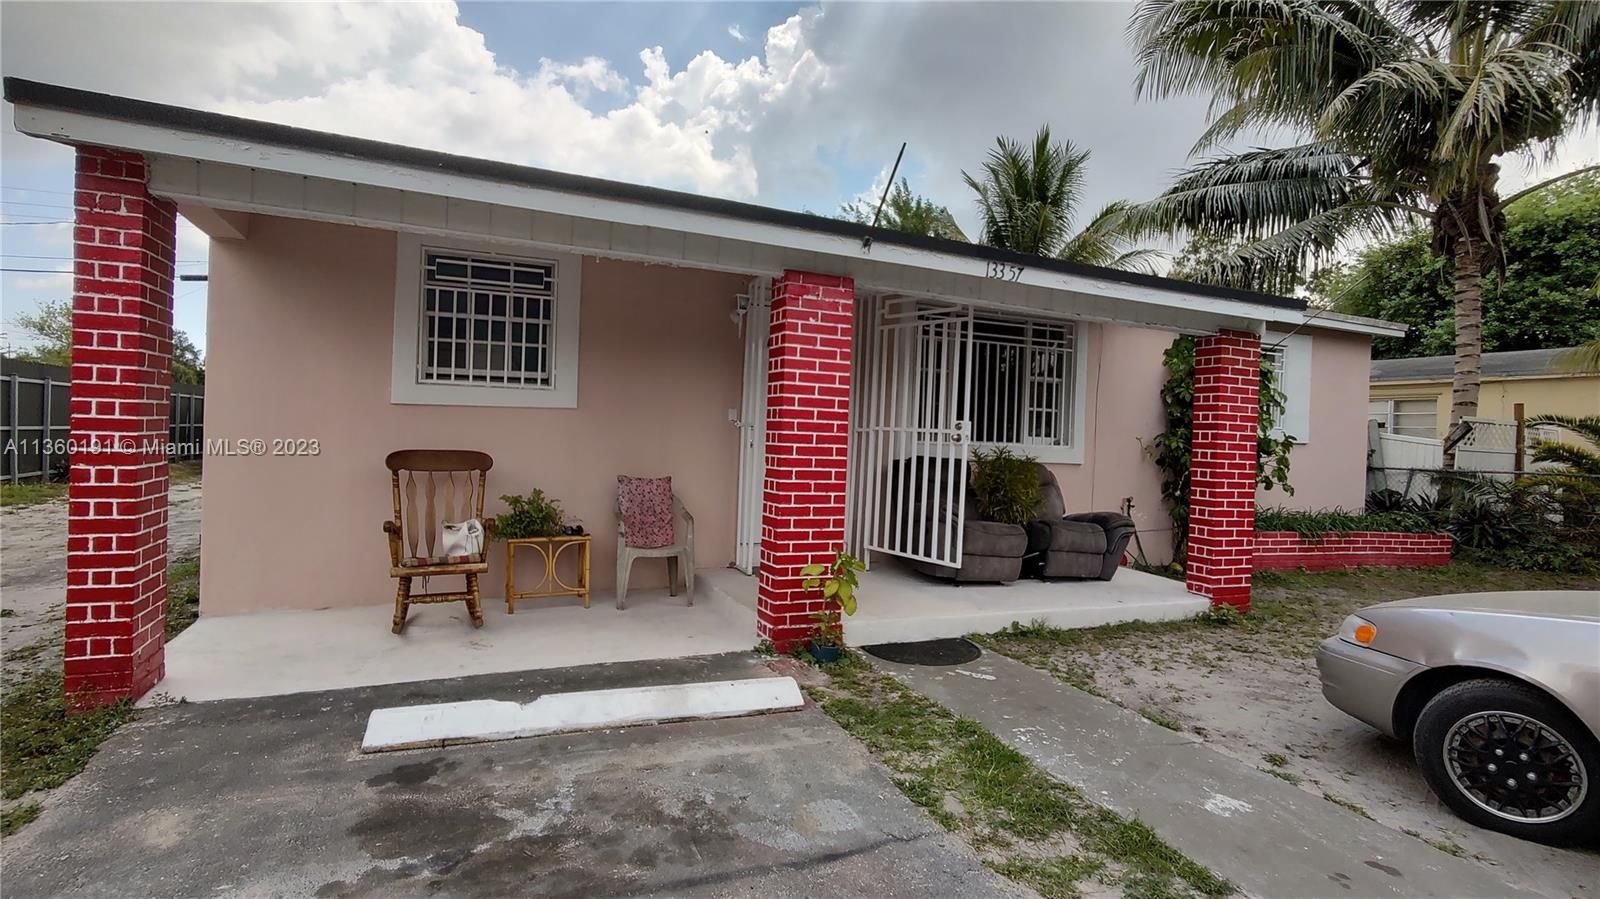 Real estate property located at 13357 Aswan Rd, Miami-Dade County, Opa-locka, FL